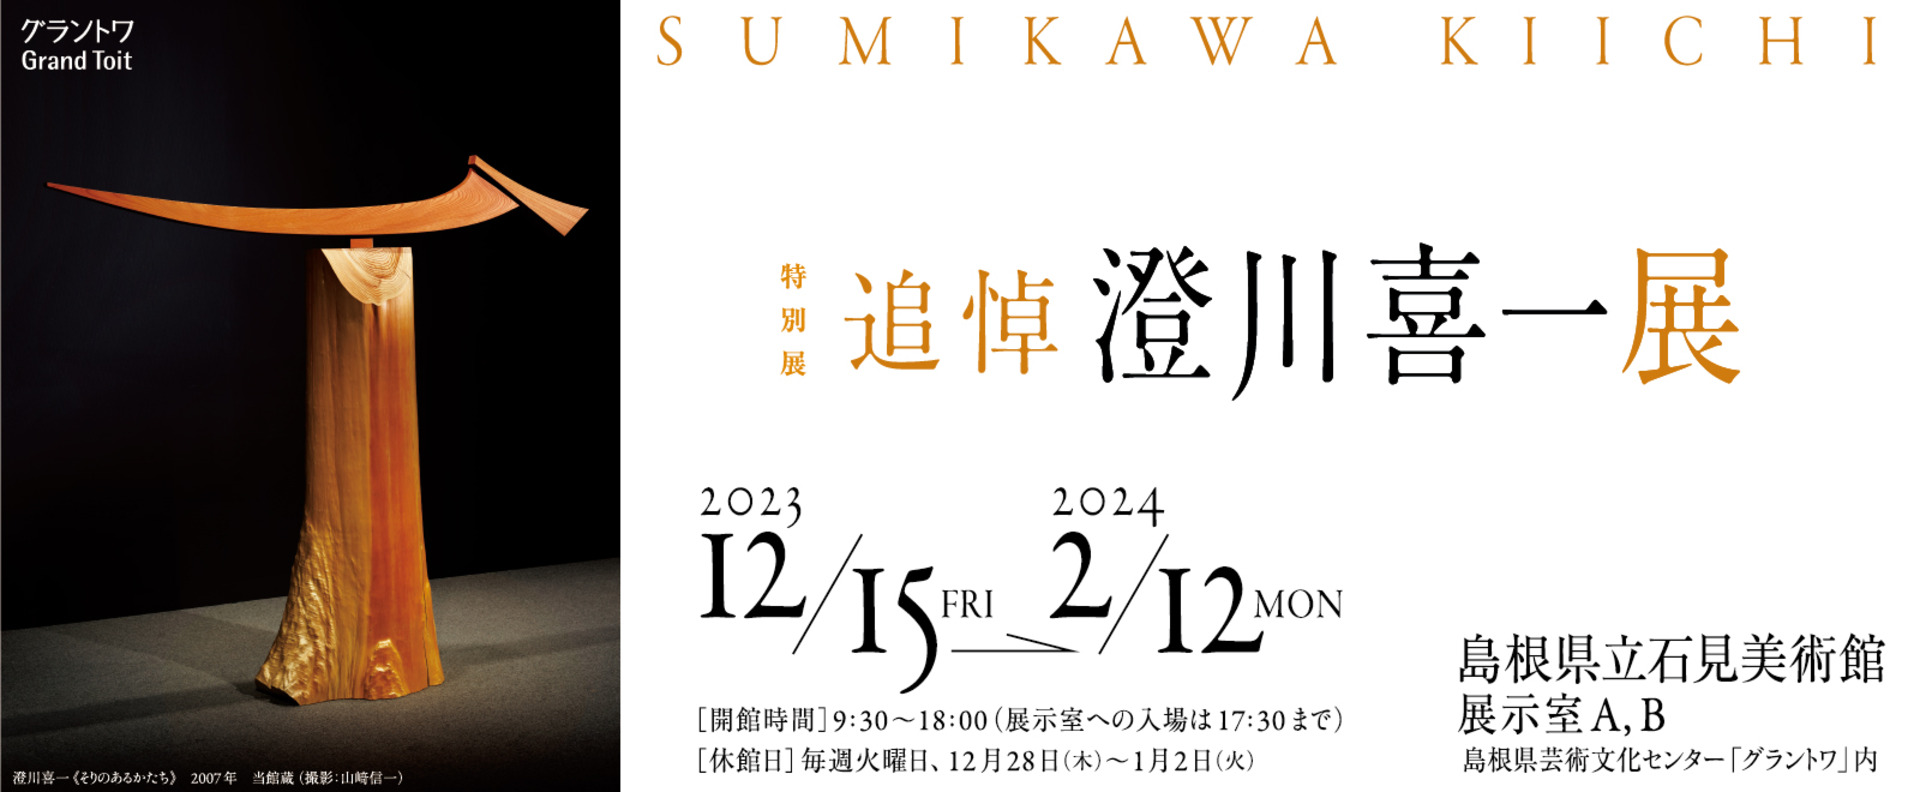 1920x banner in memory of sumikawa